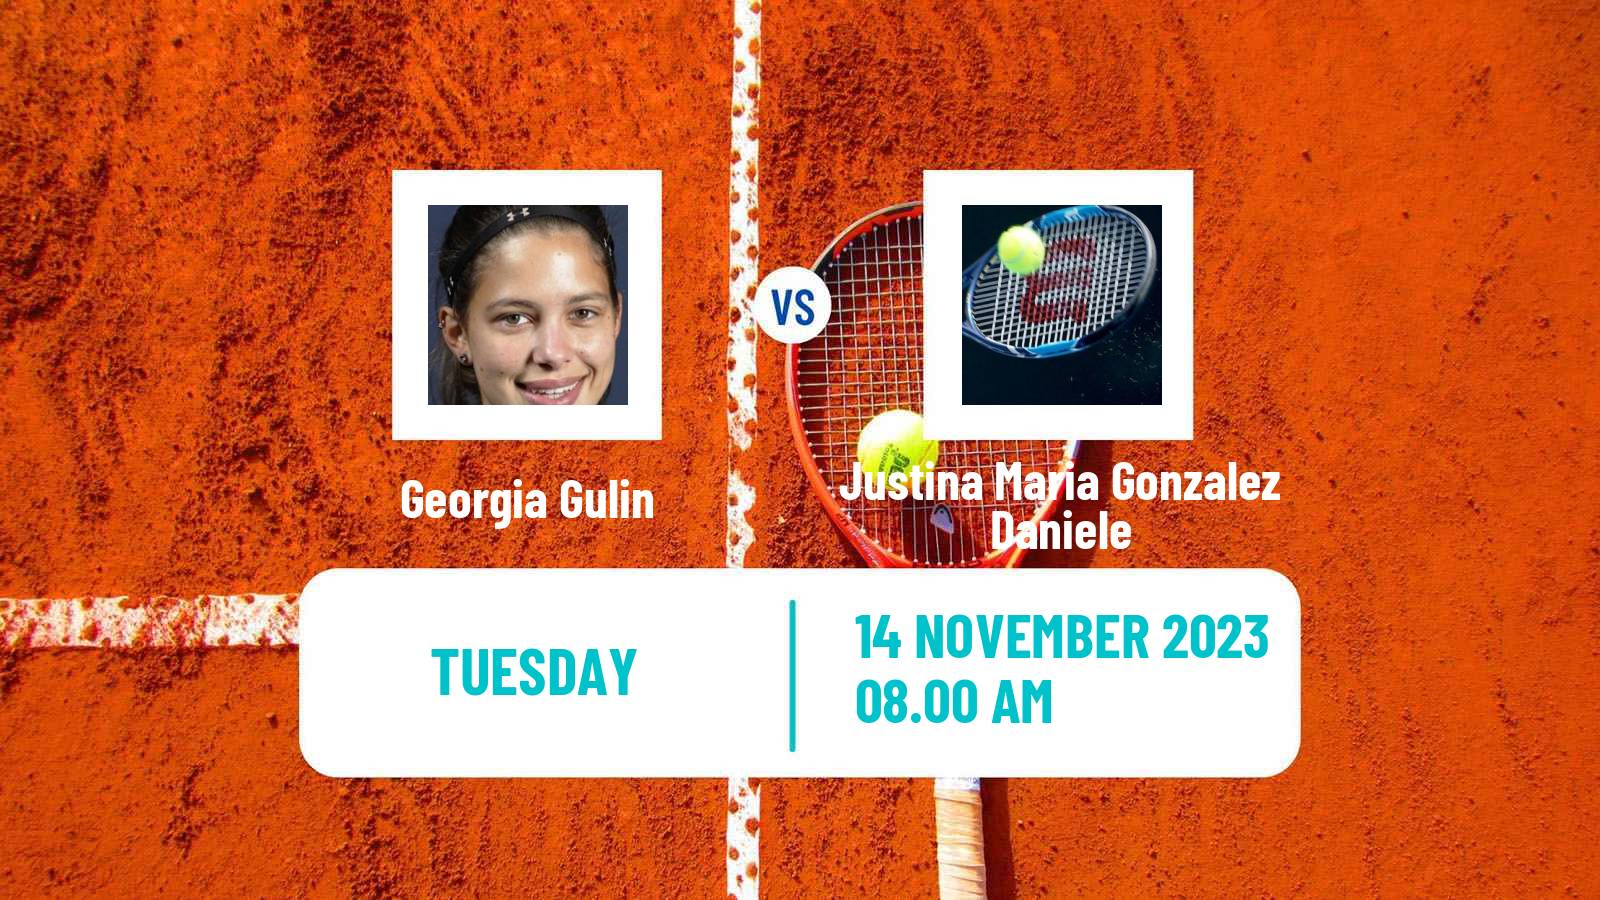 Tennis ITF W15 Buenos Aires 2 Women Georgia Gulin - Justina Maria Gonzalez Daniele